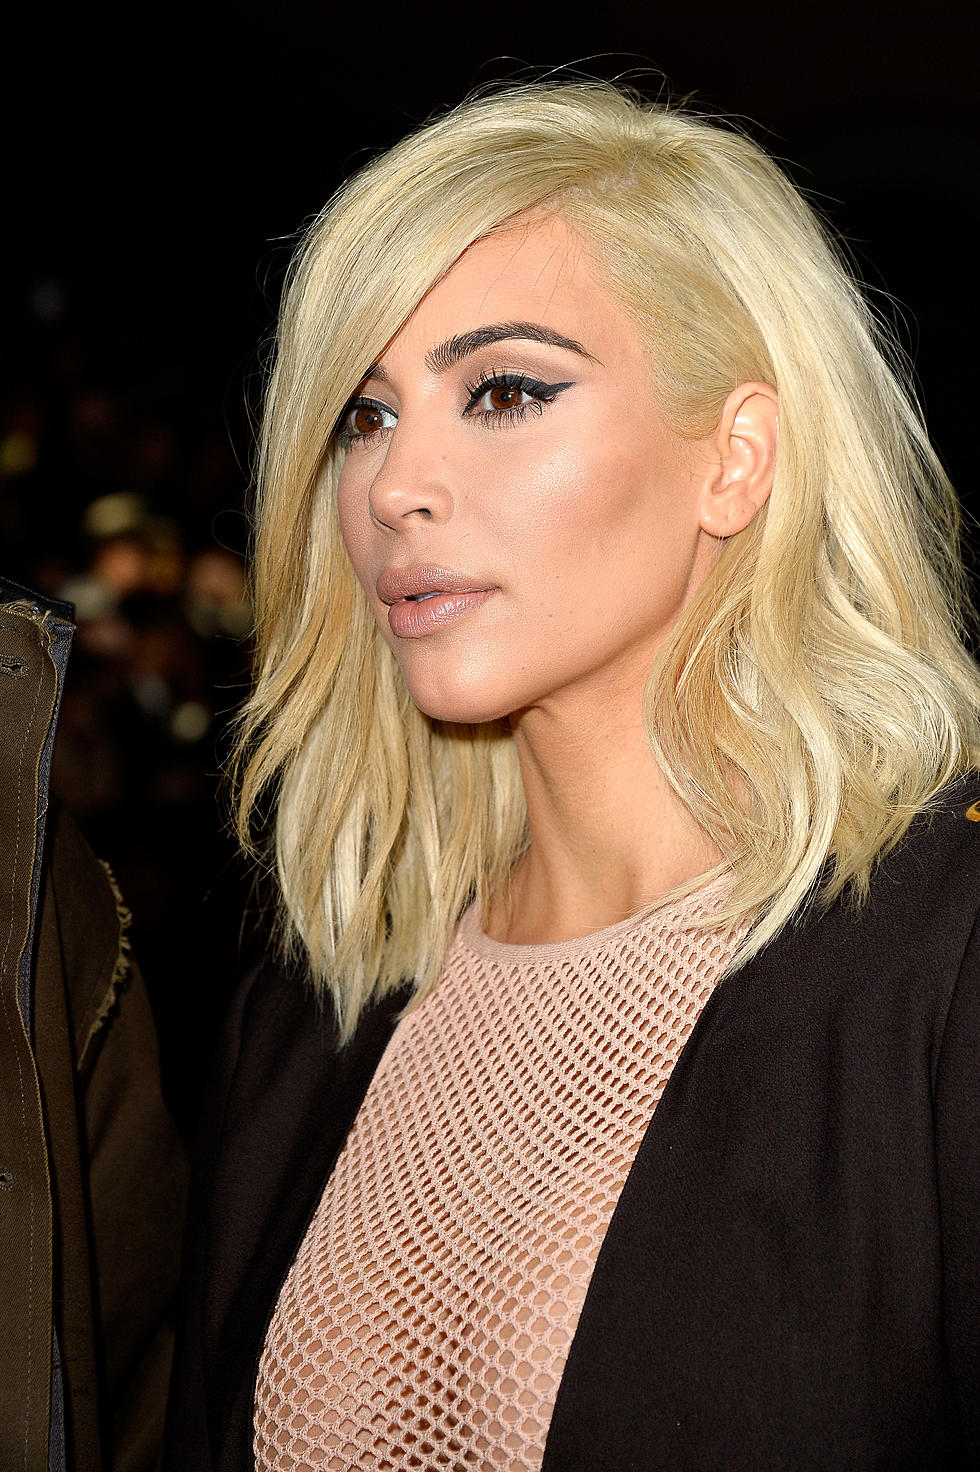 What Do You Think of Kim Kardashian’s Blonde Hair?